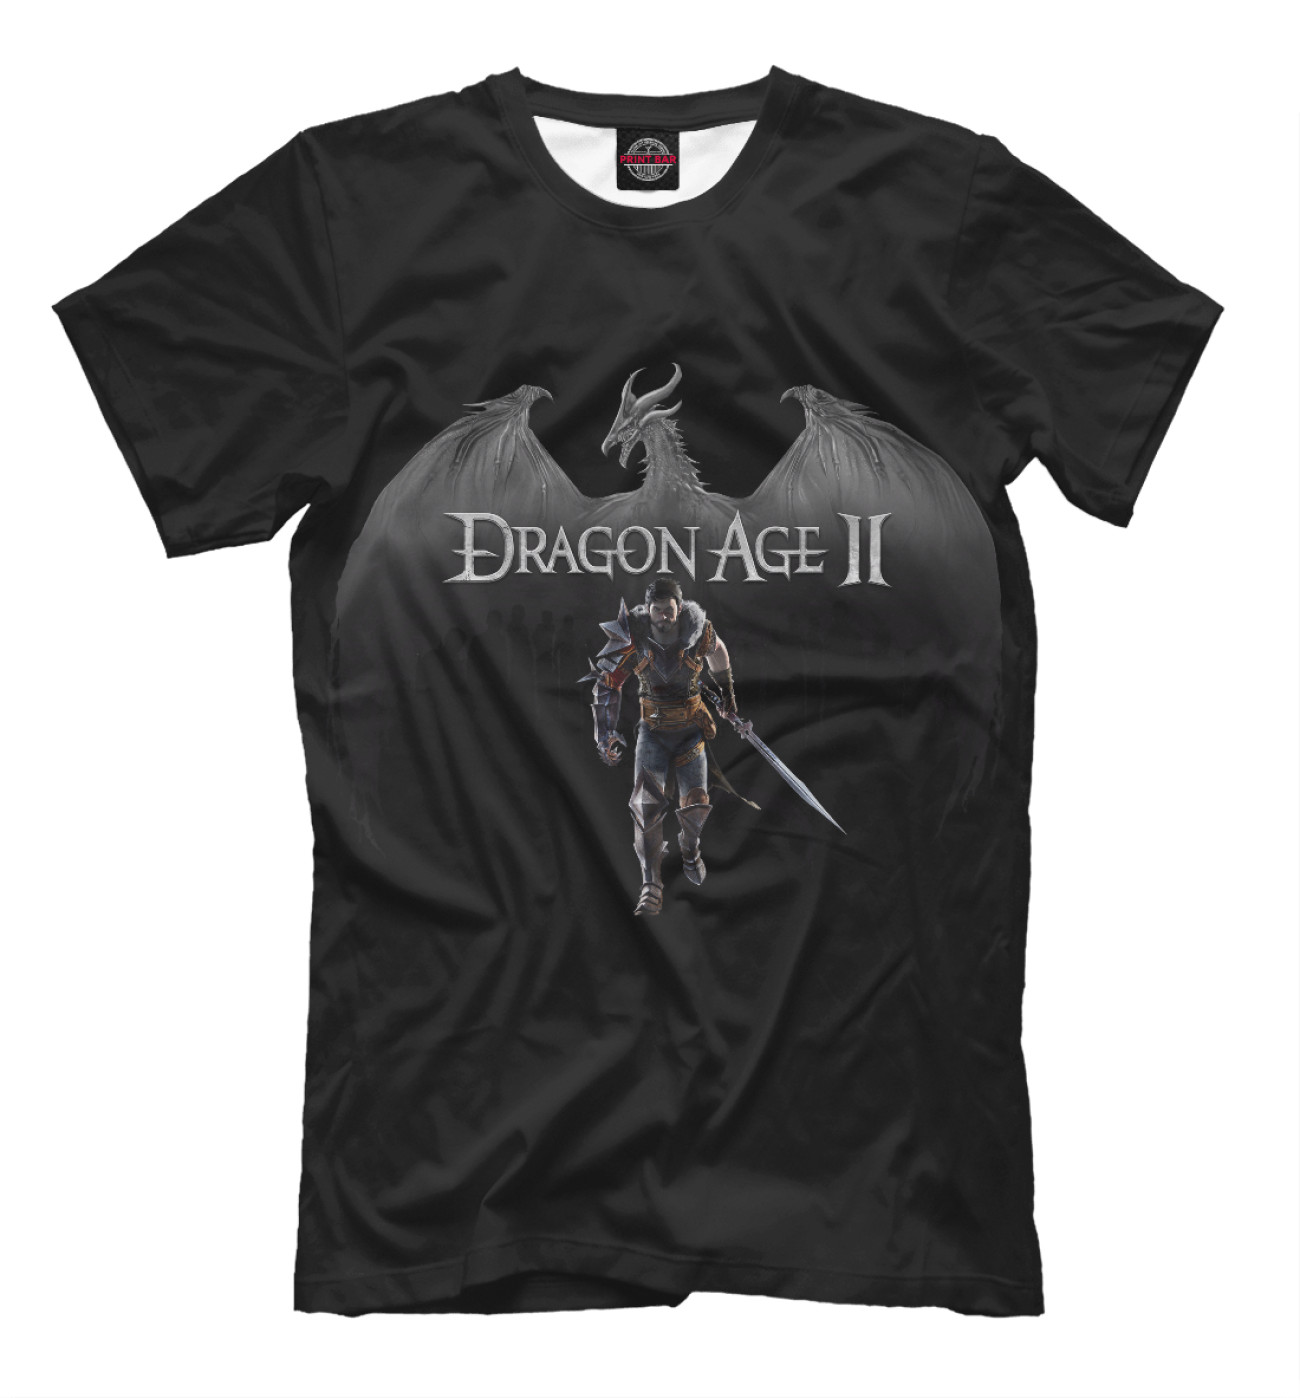 Мужская Футболка Dragon Age 2, артикул: DRG-934610-fut-2